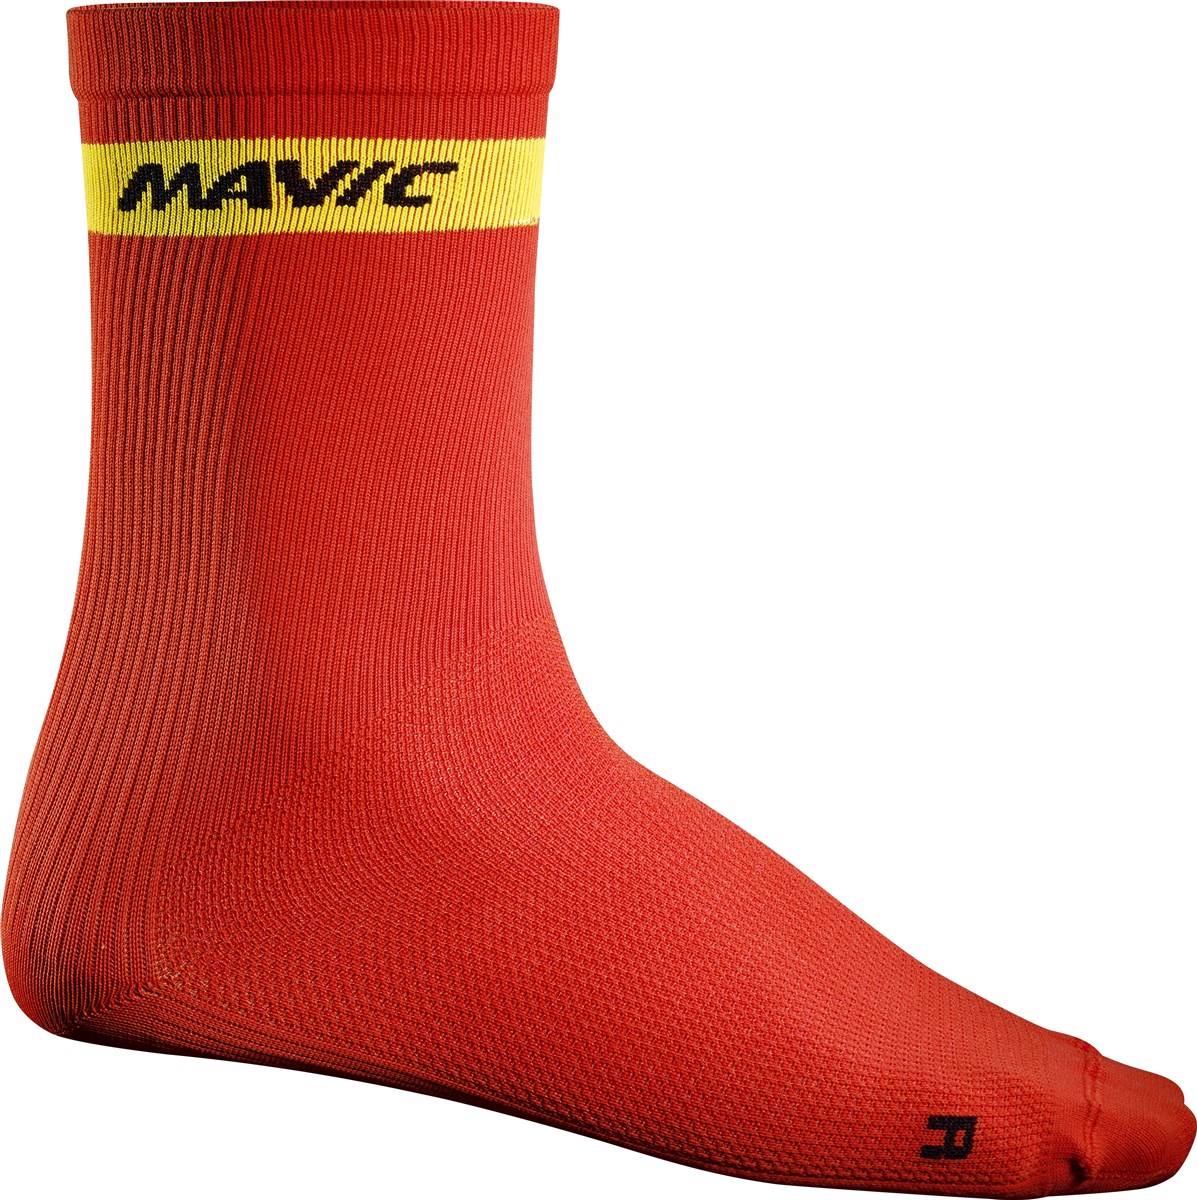 Mavic Cosmic High Cycling Socks product image